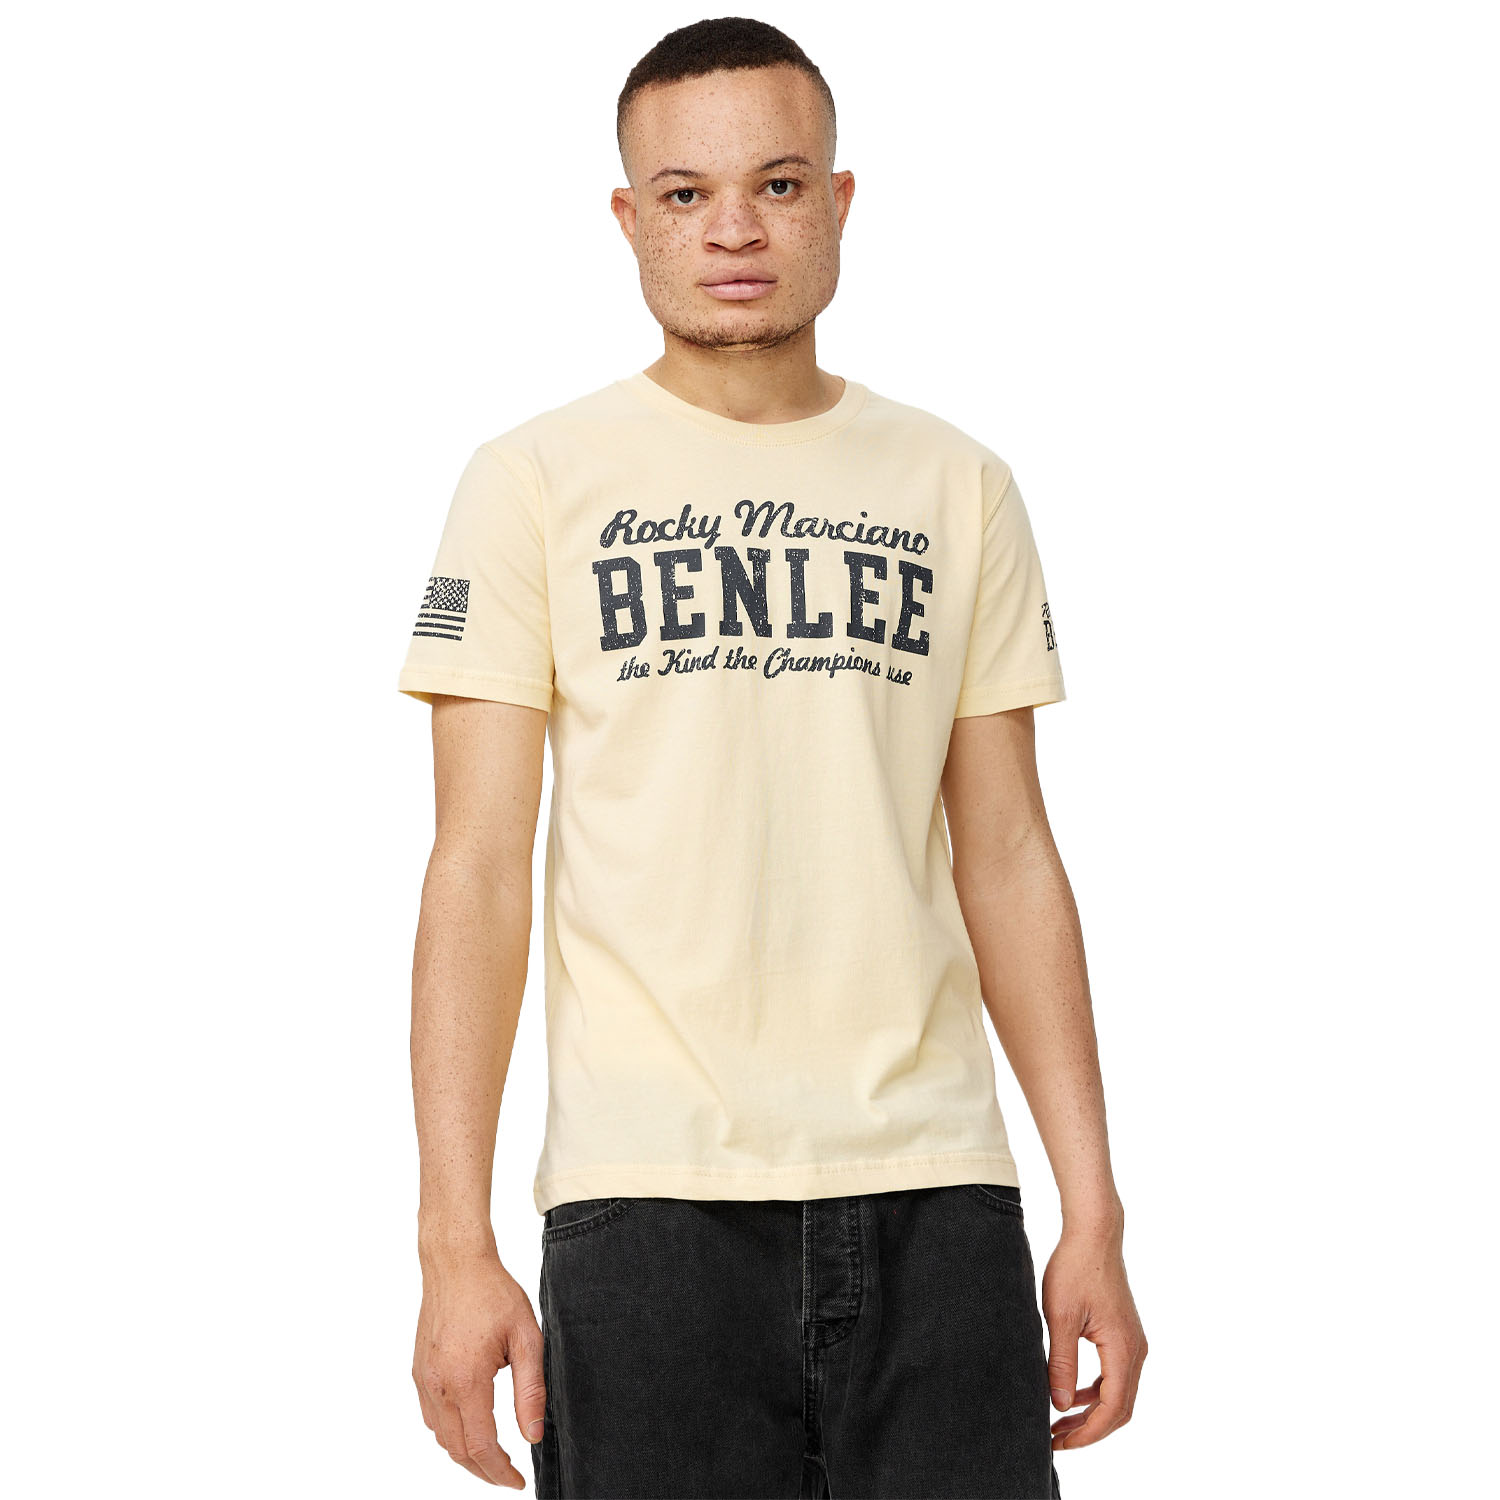 BENLEE T-Shirt, Lorenzo, beige, S